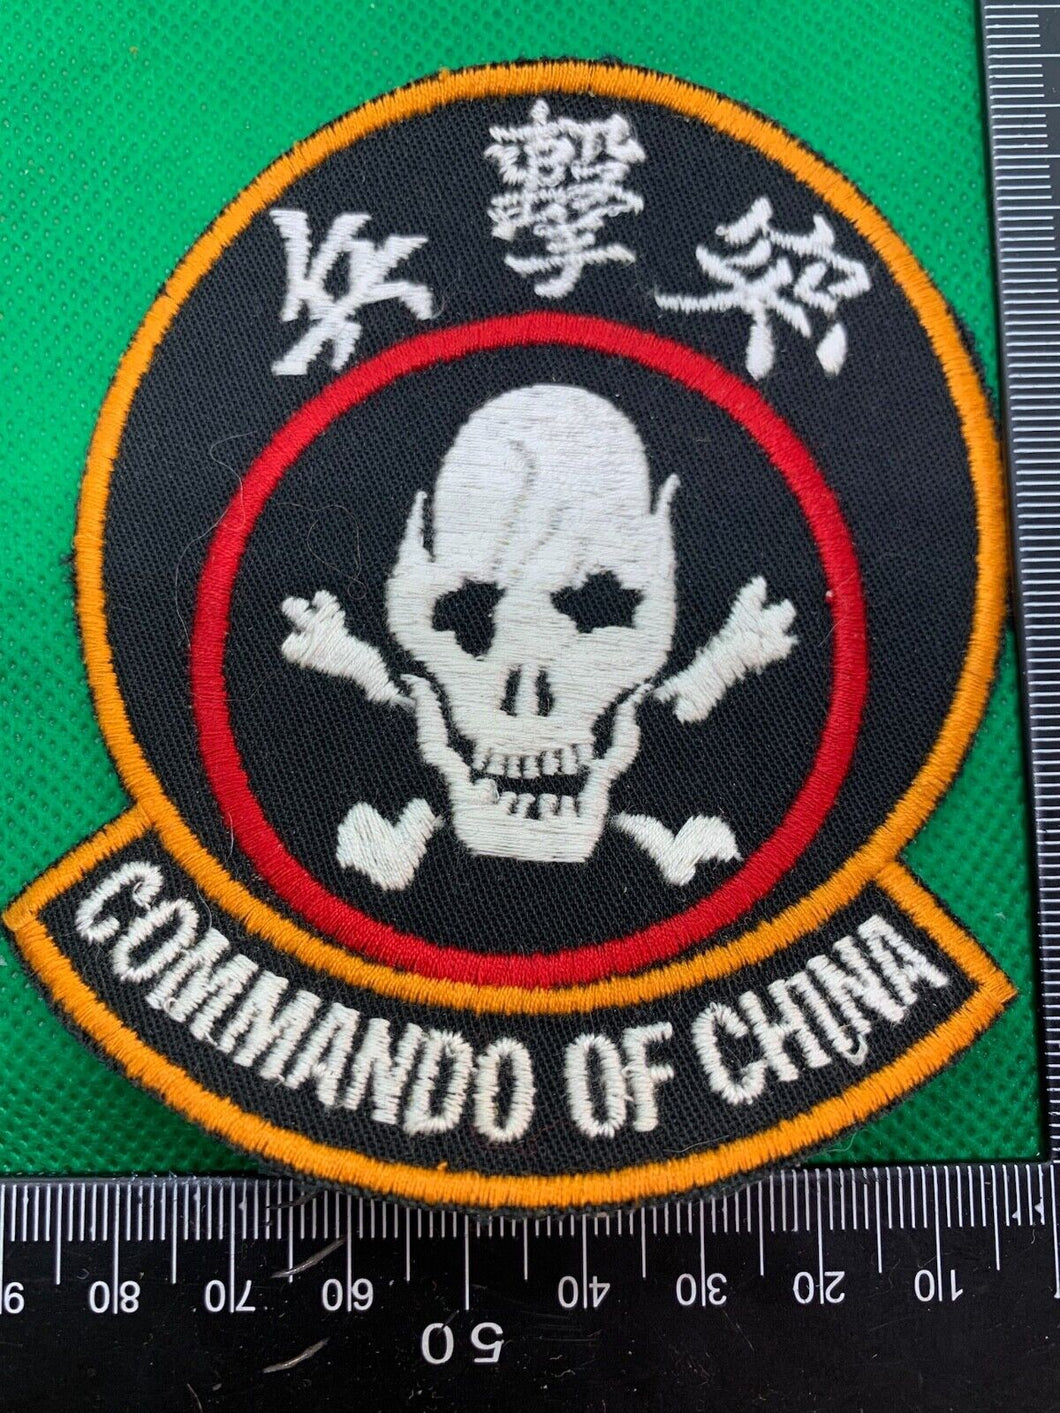 Chinese Army Commando of China Unit Badge - Vietnam War era?